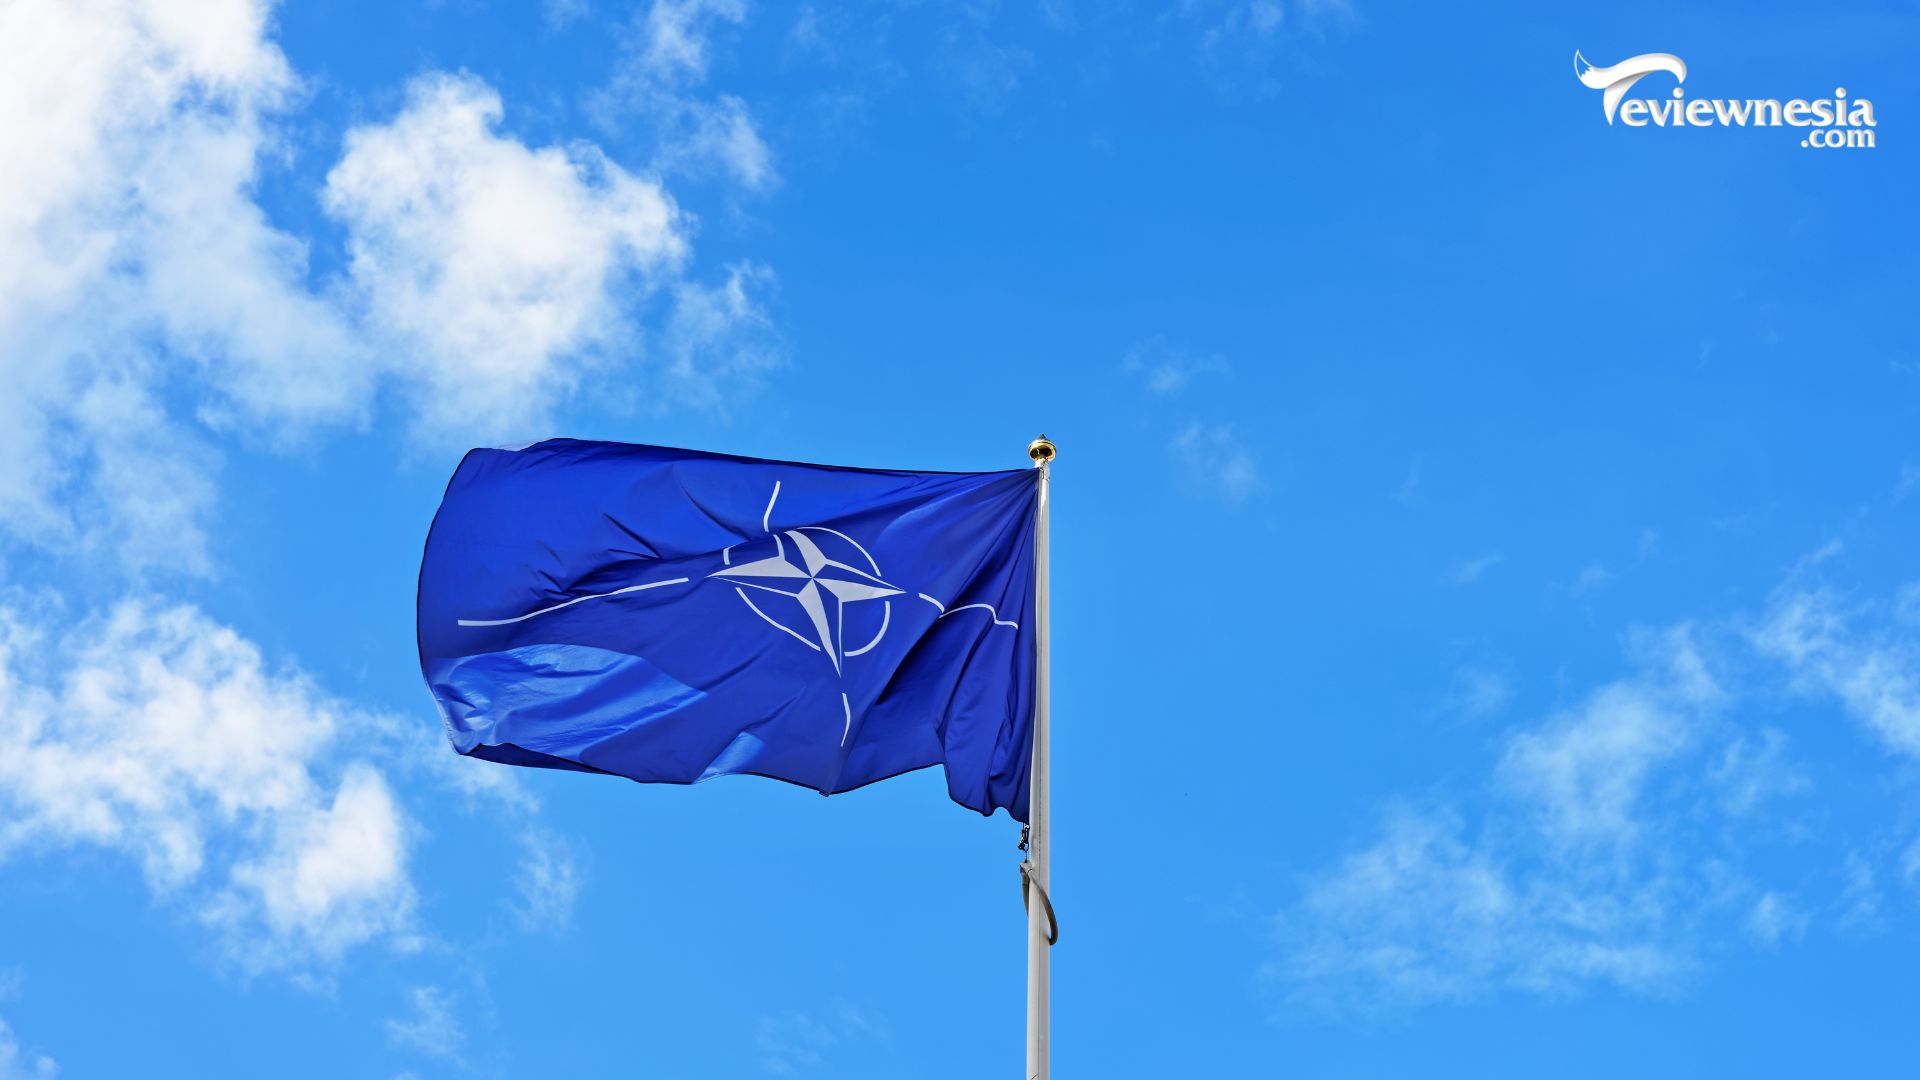 Pemikiran Zelensky dalam Pengambilan Keputusan Bergabung dengan NATO